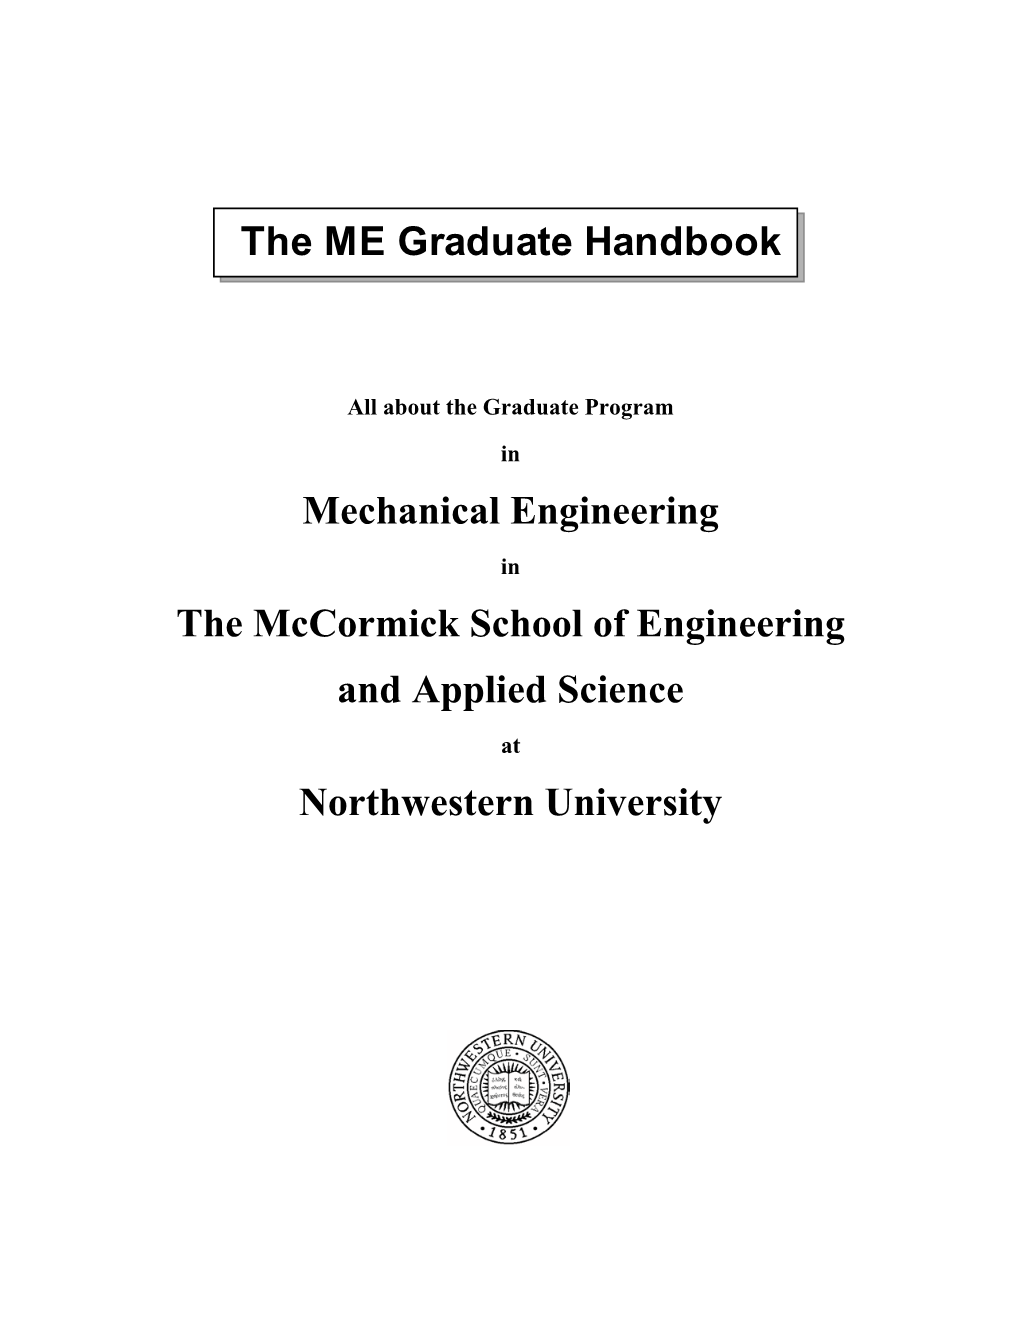 The ME Graduate Handbook Mechanical Engineering The